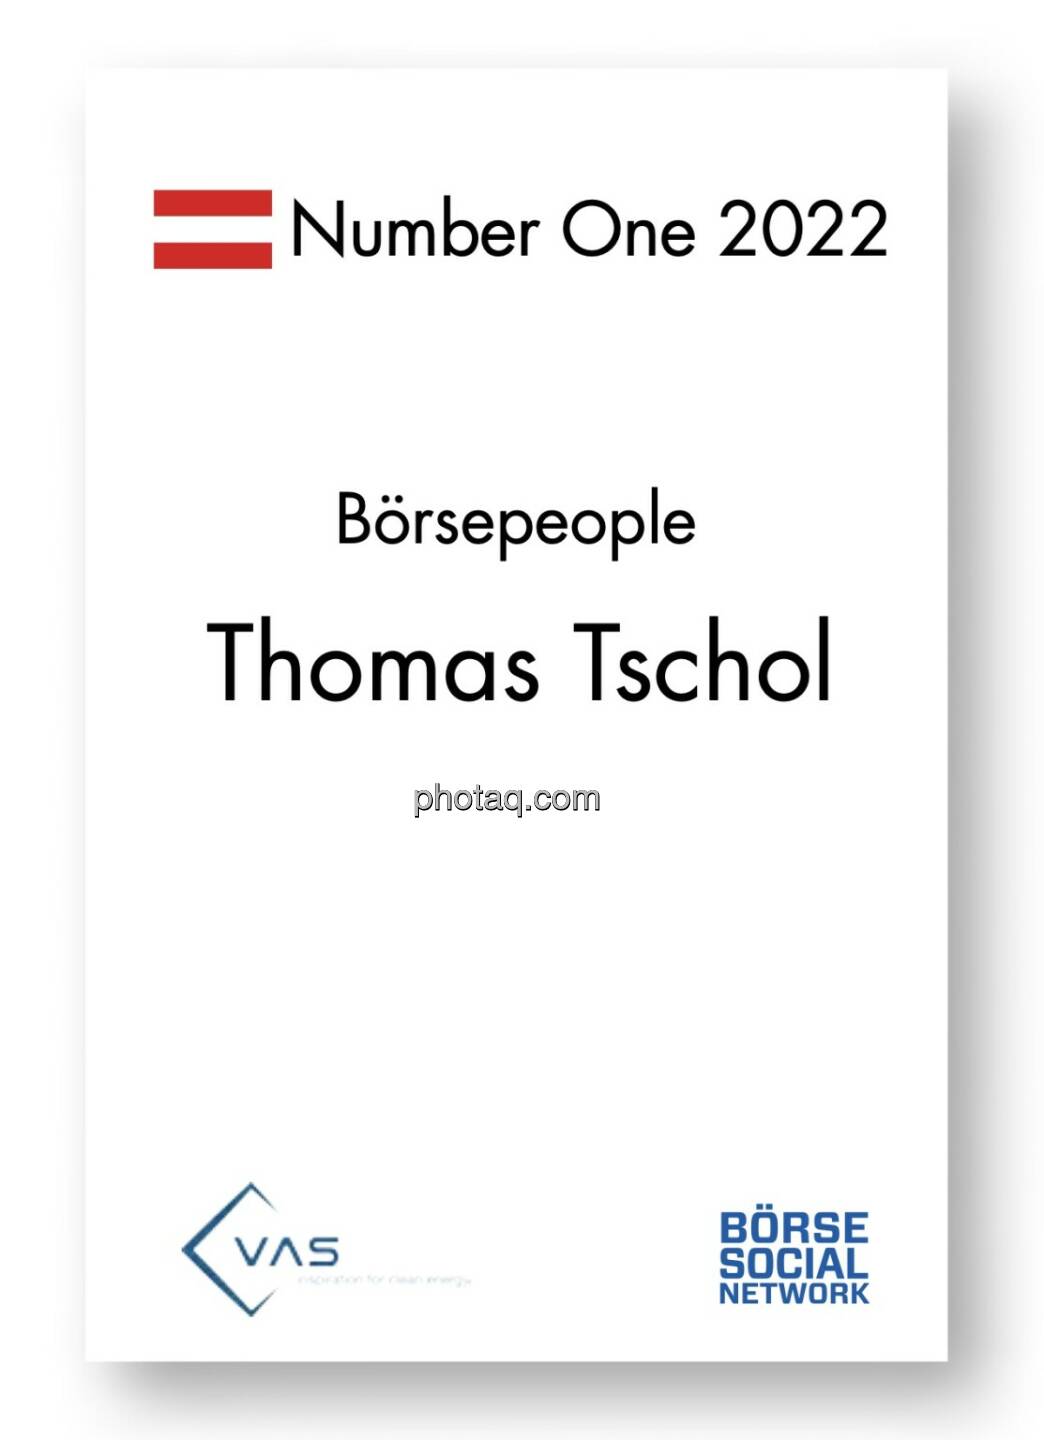 Number One Börsepeople: Thomas Tschol